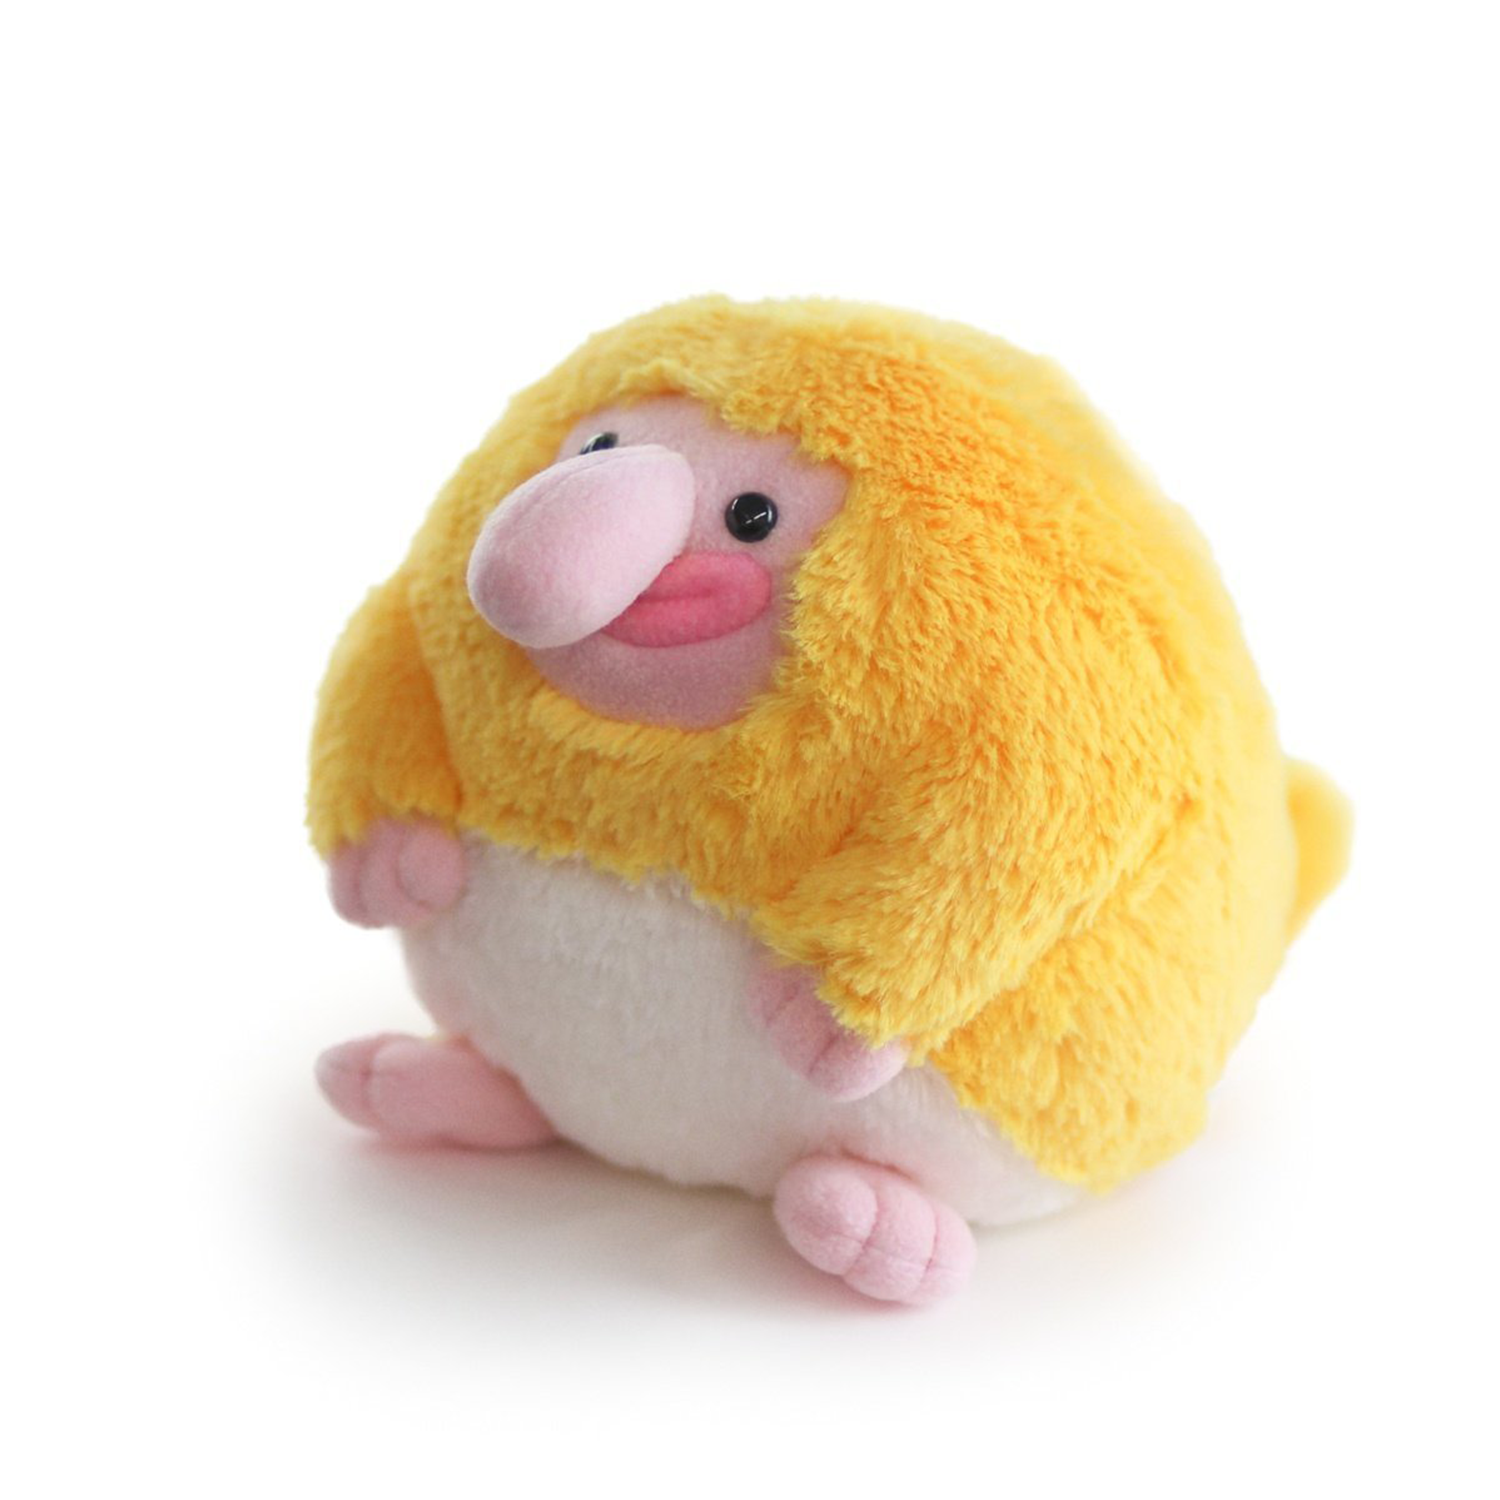 Internet Meme Forever Alone Plush Toy Stuffed Animal Plushy 